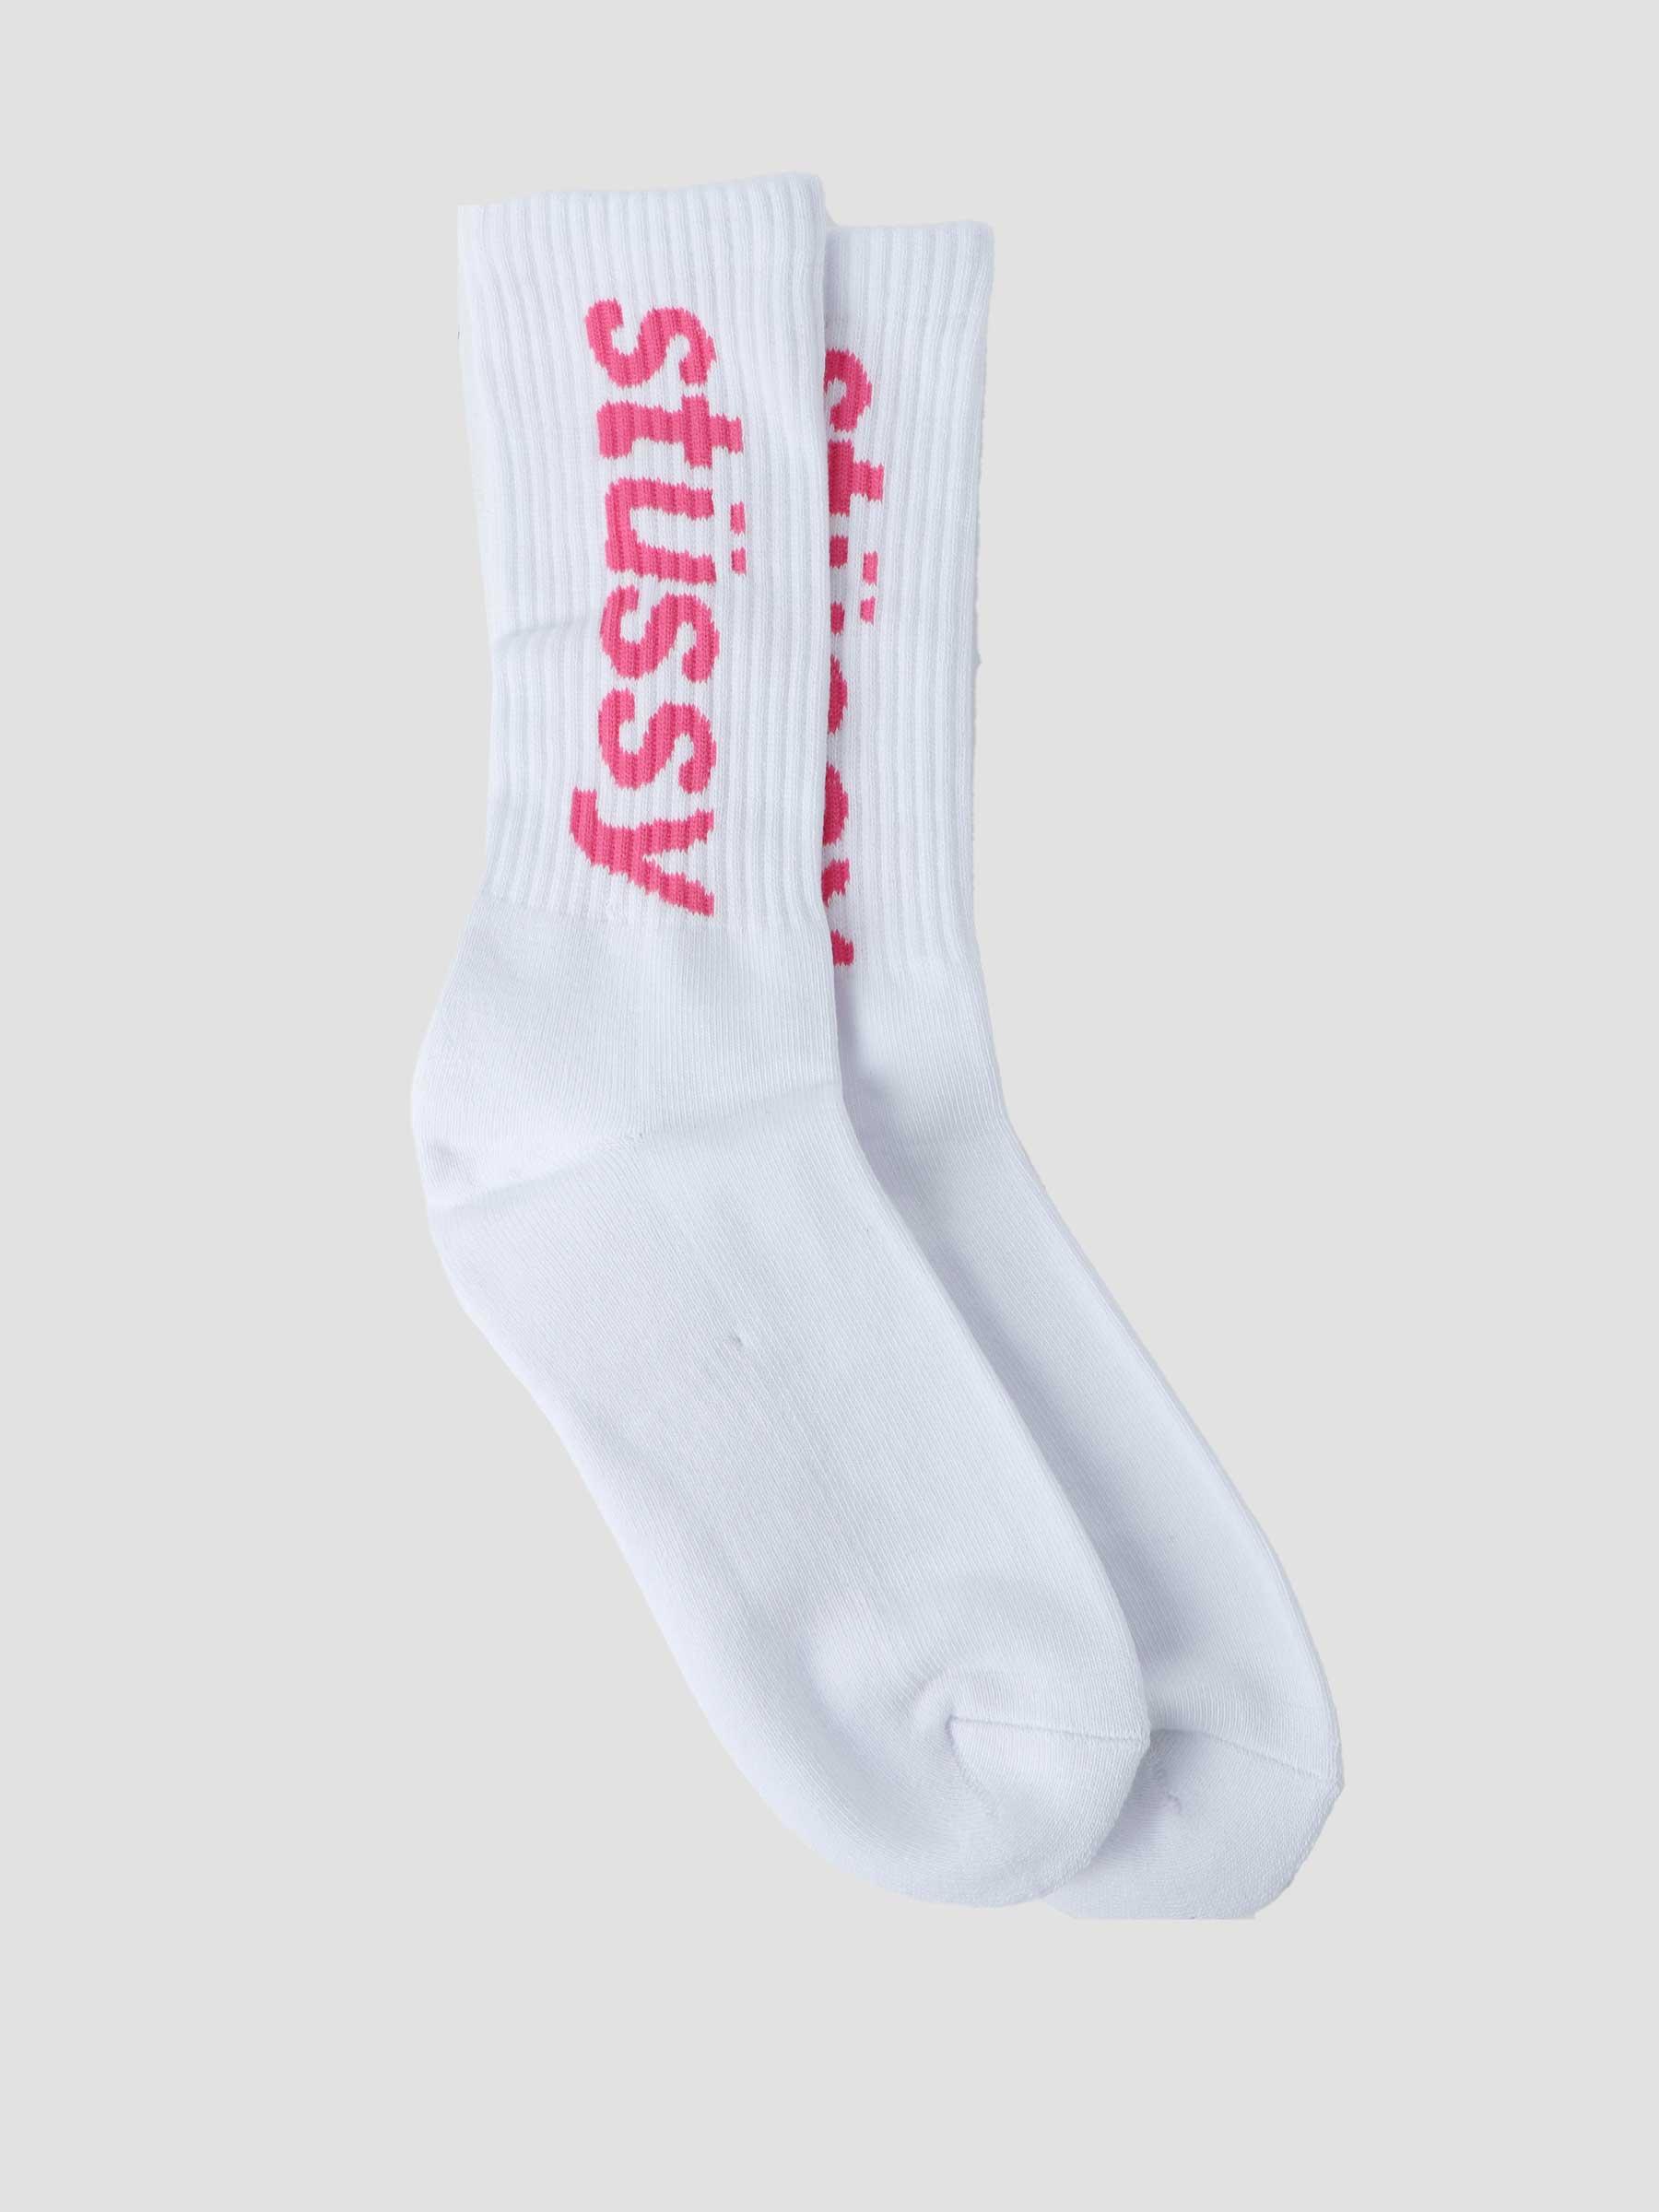 Helvetica Crewneck Socks White Pink 138845-1428